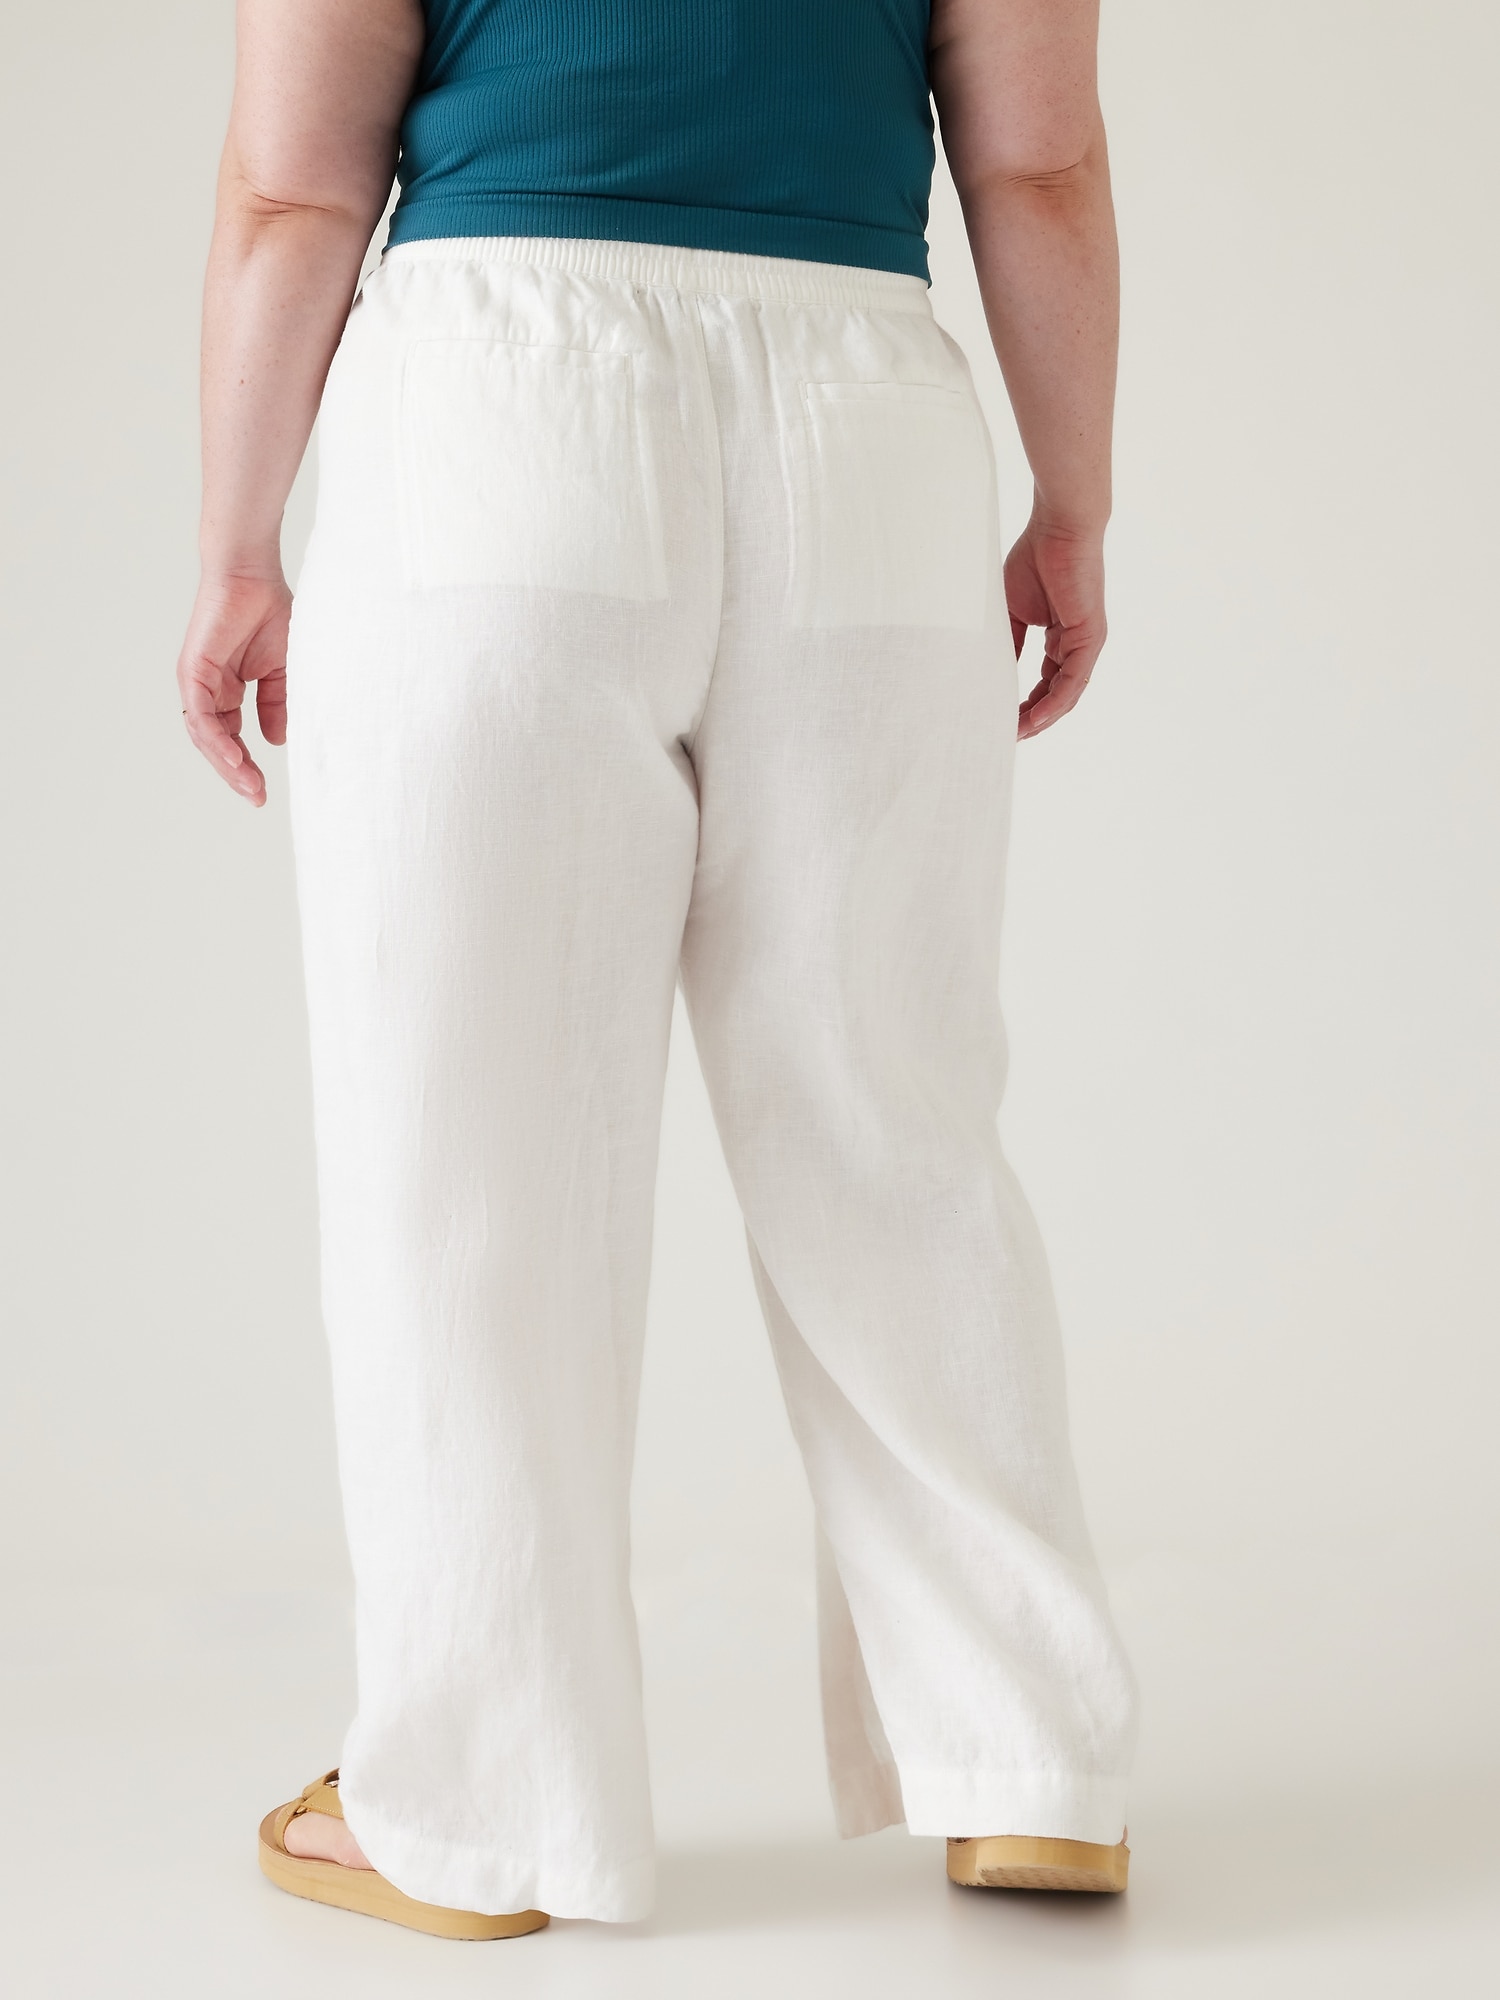 White Linen Pants -  Canada